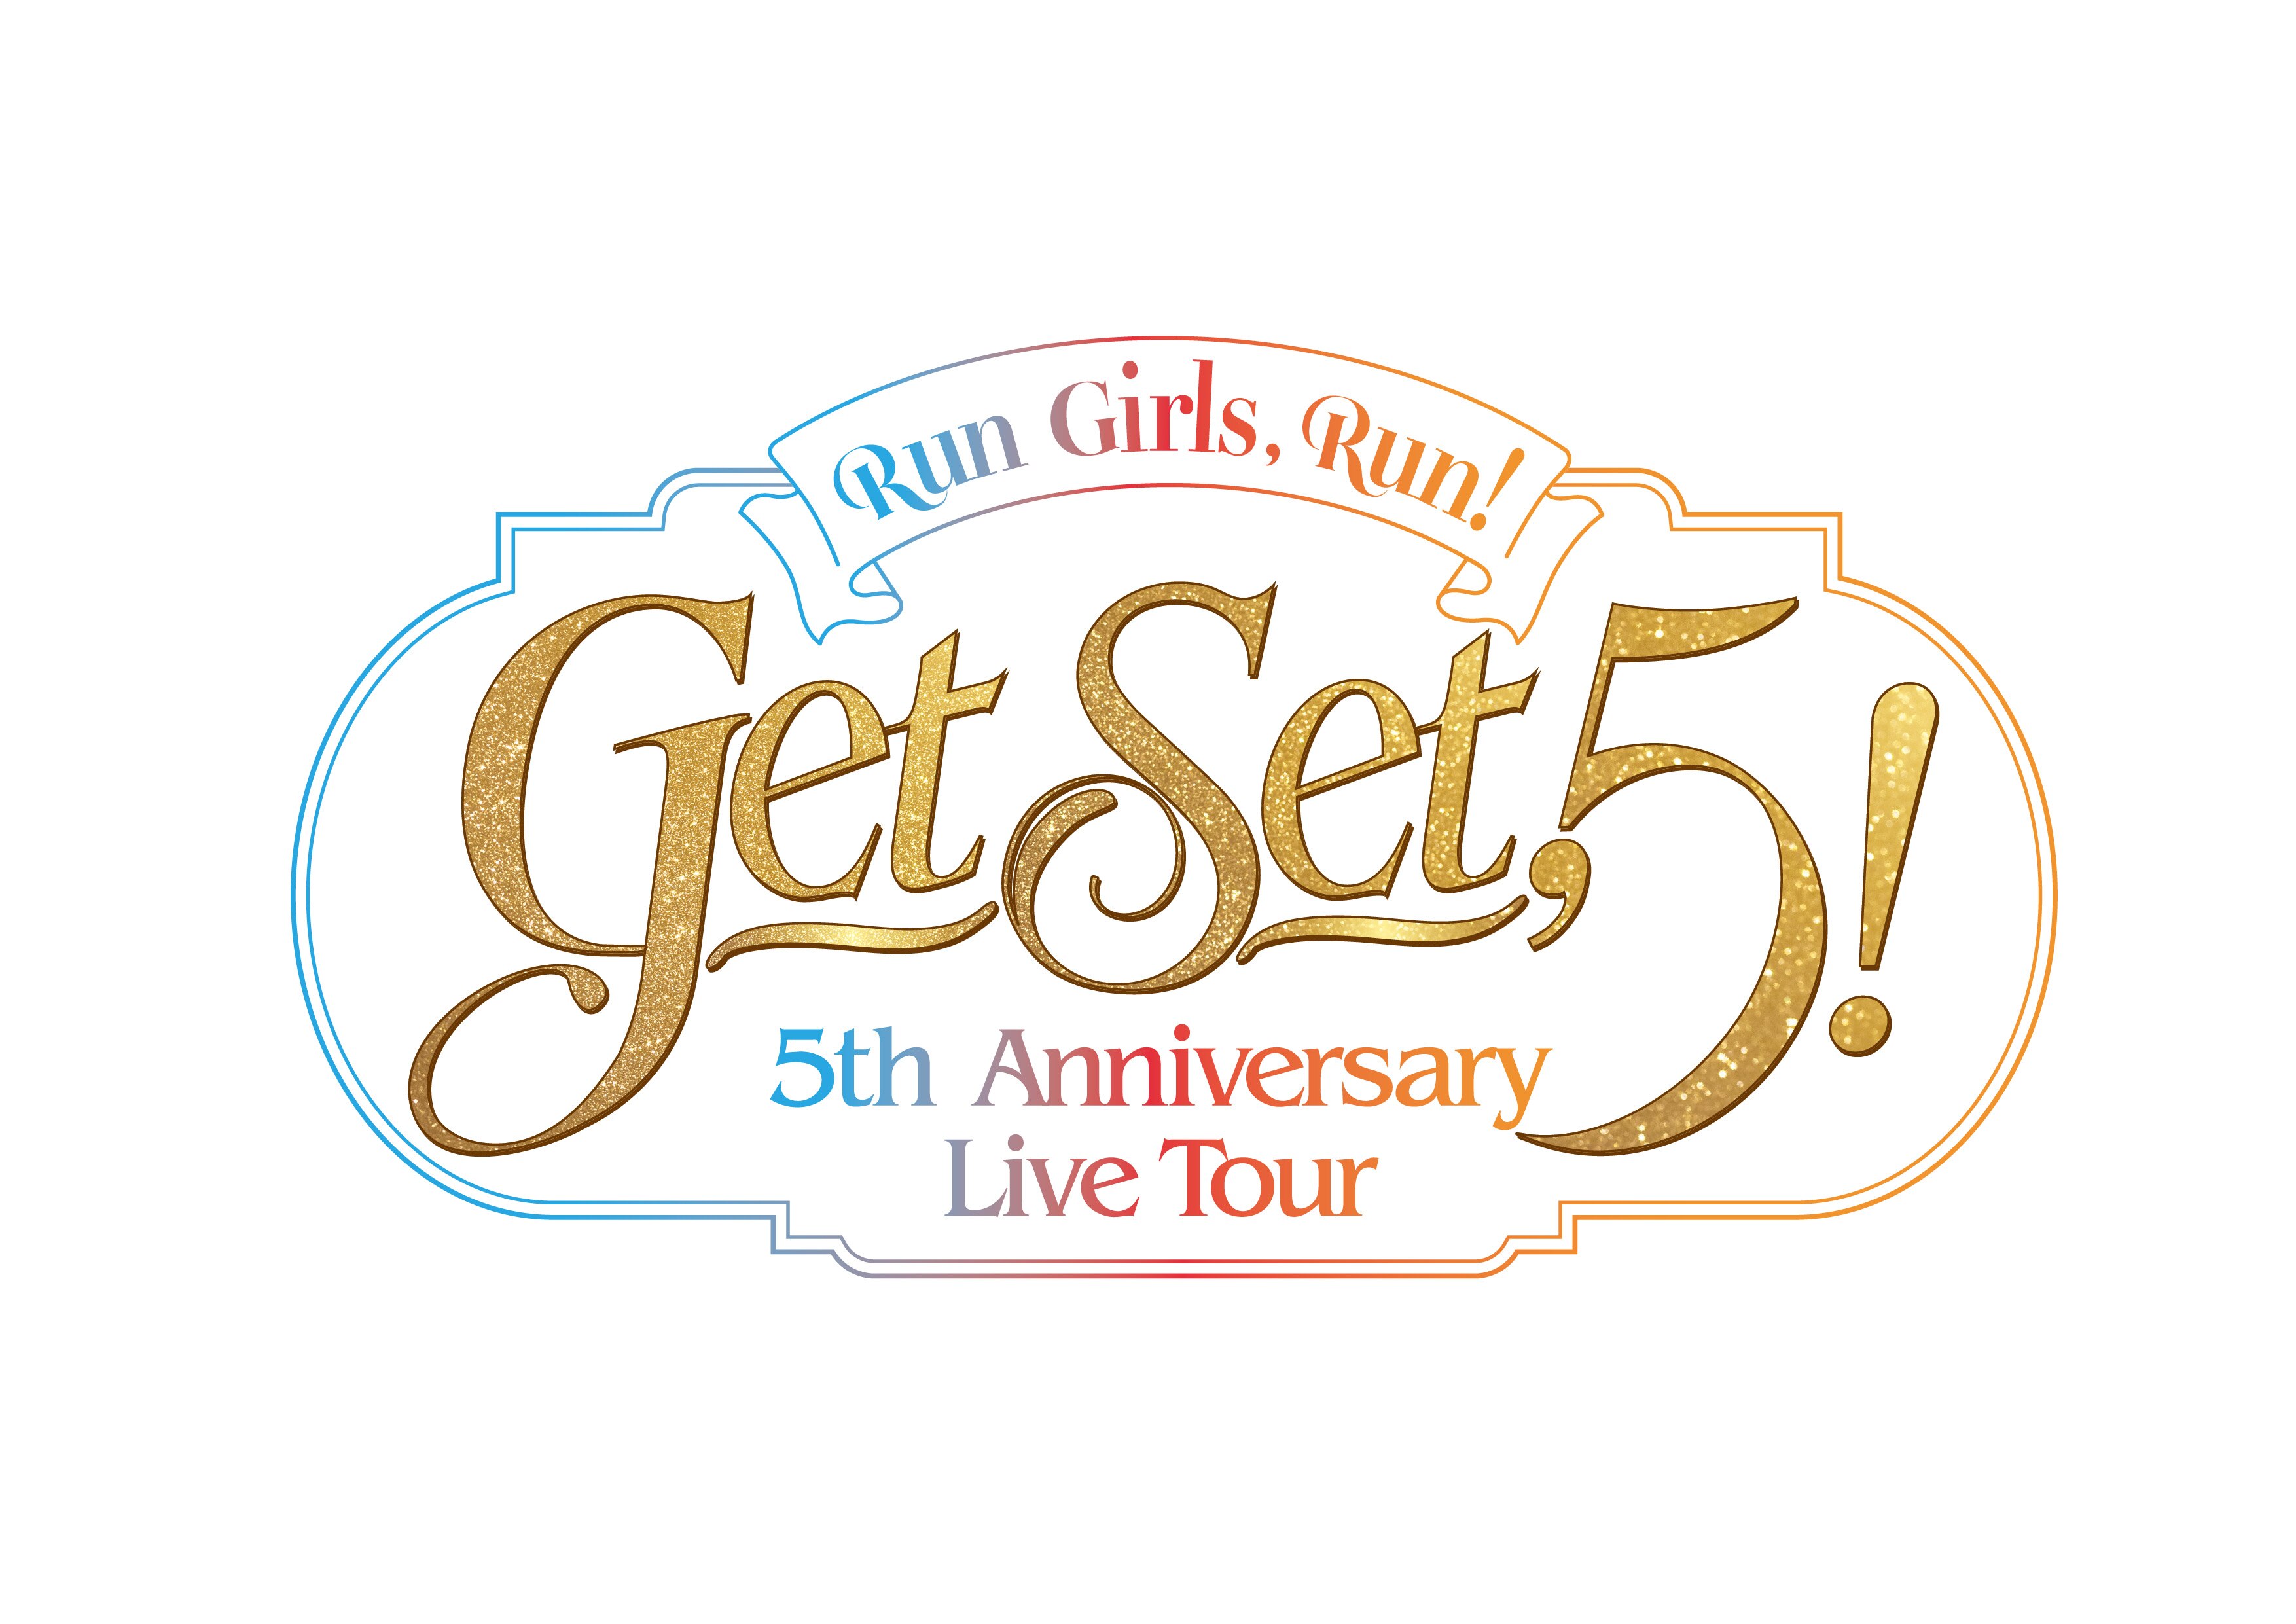 『Run Girls, Run！5th Anniversary Live Tour Get Set, 5！』<br />
東京公演オフィシャル4次先着先行受付、宮城・大阪公演一般発売のご案内